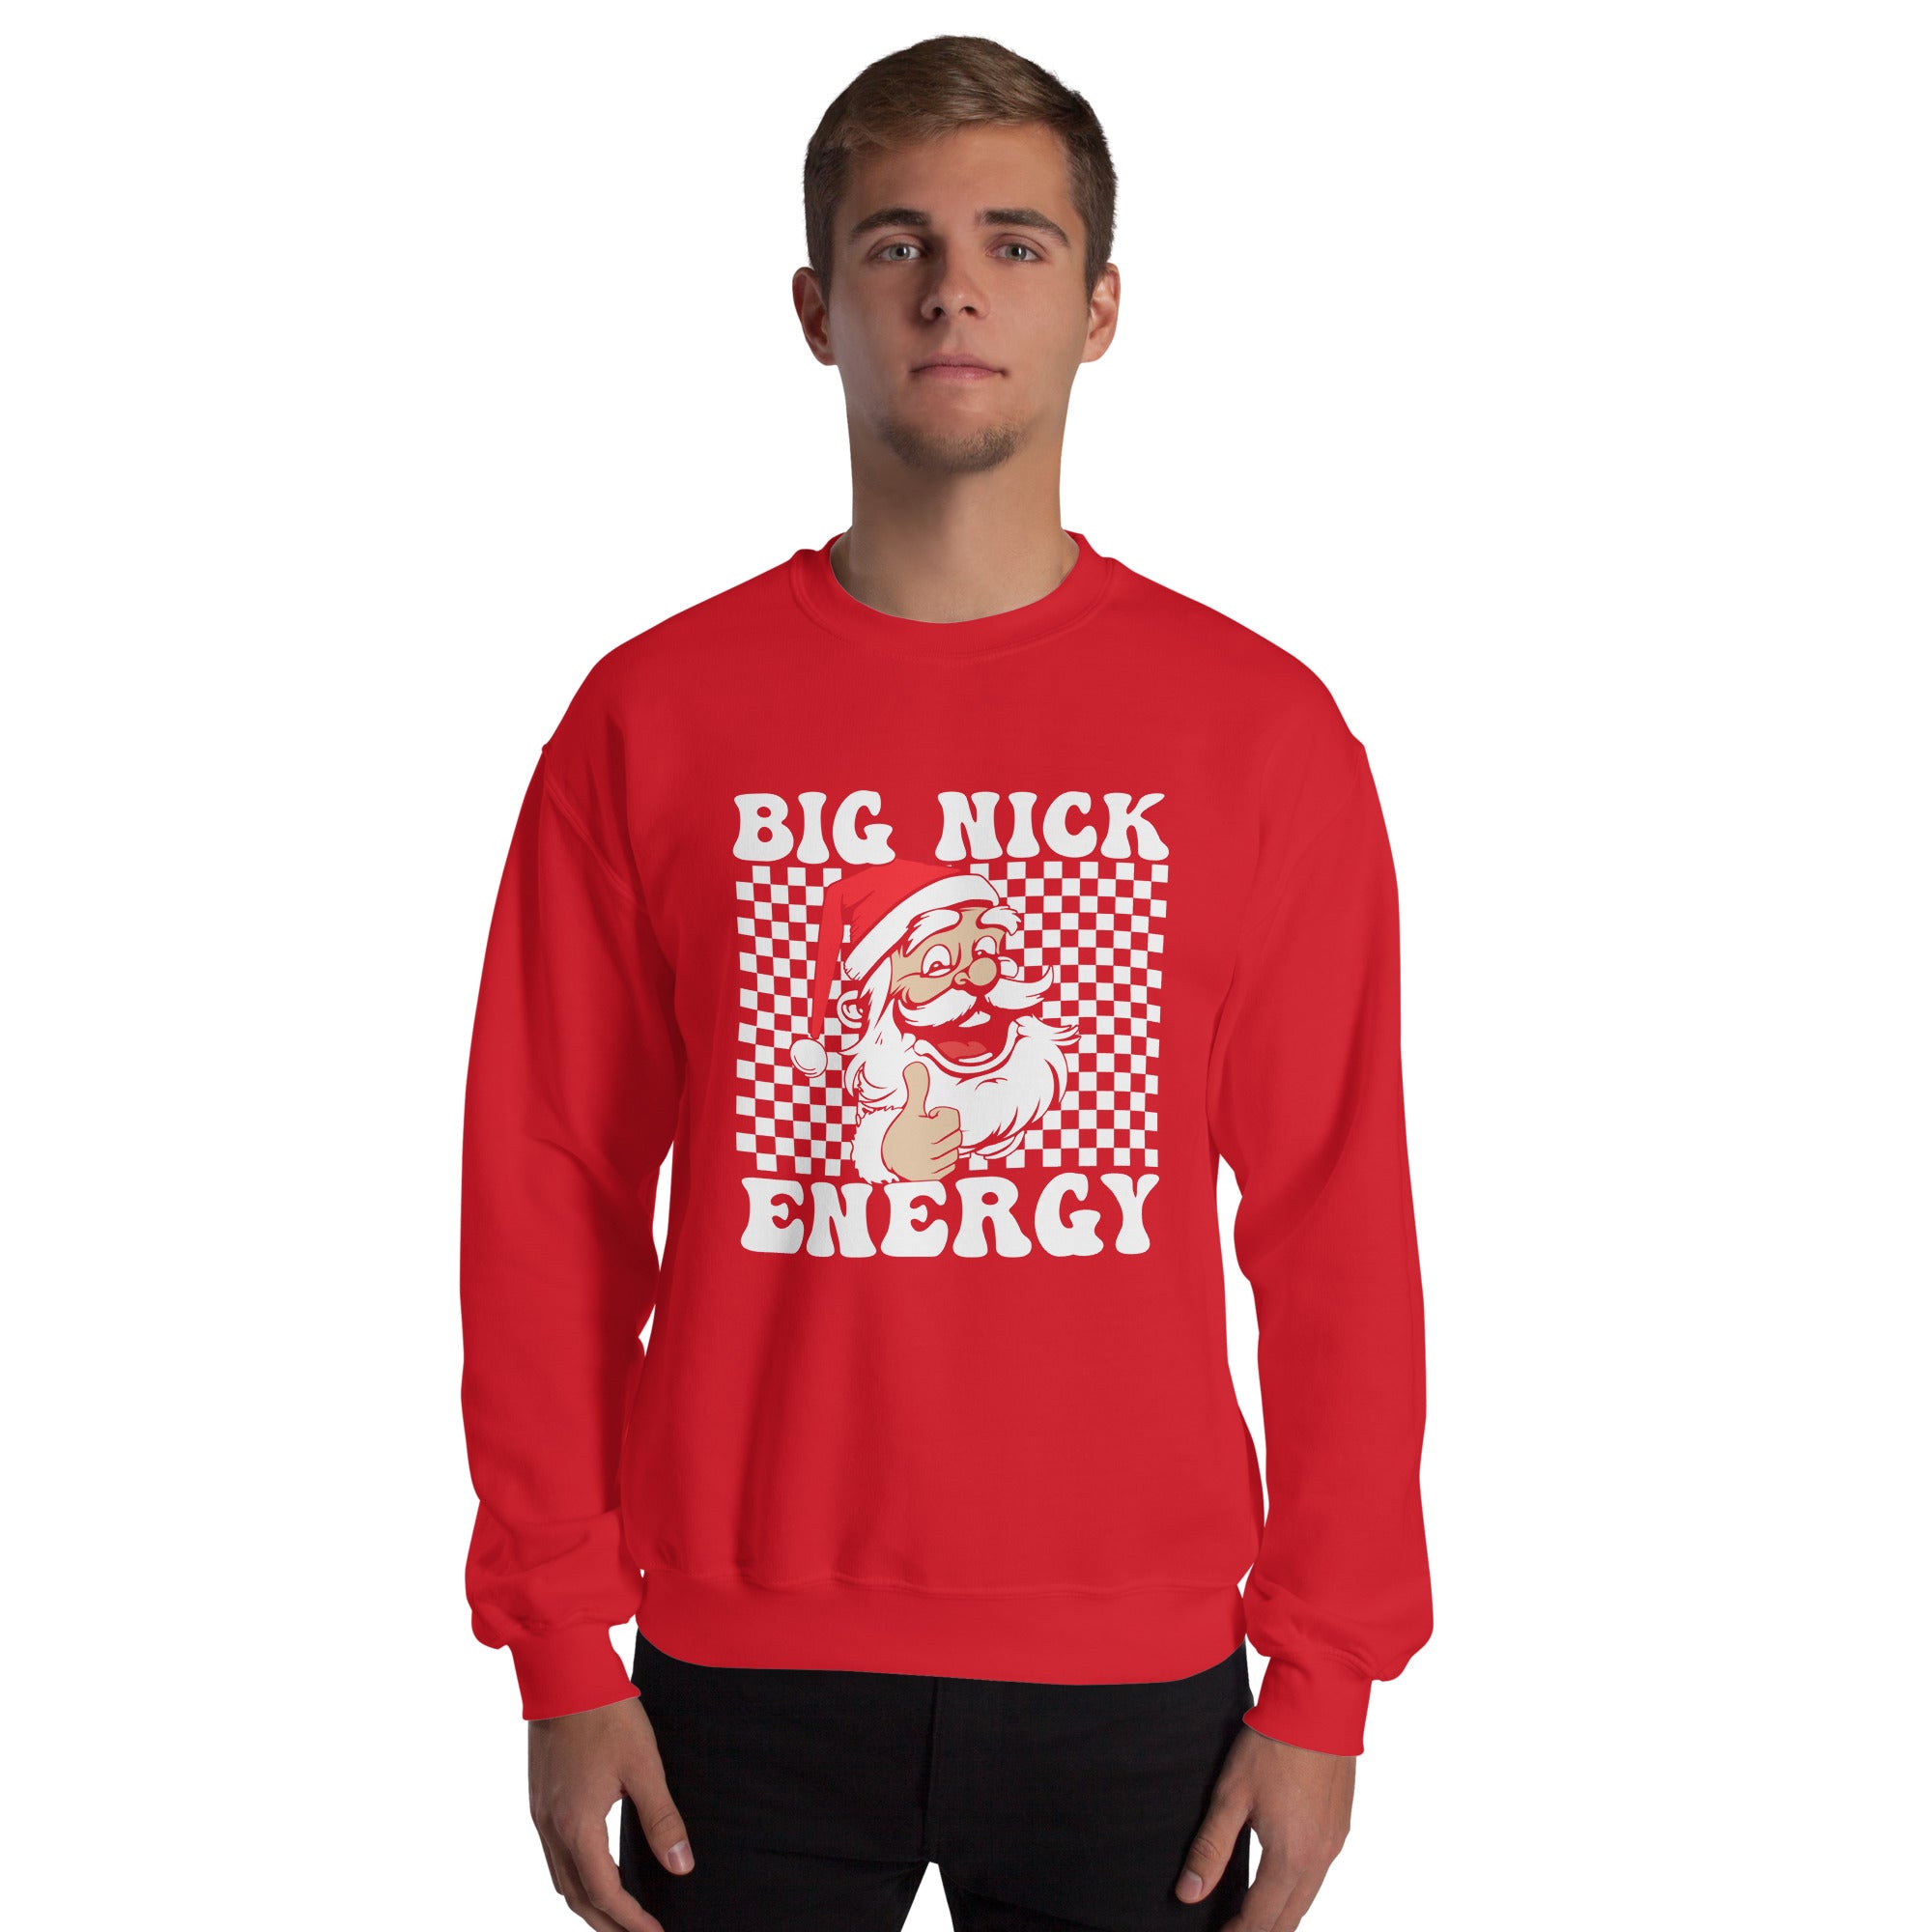 Big Nick Energy Funny Christmas Men's Sweatshirt Trendy Santa Holiday Humor Festive Xmas Sarcastic Winter Men's Jumper